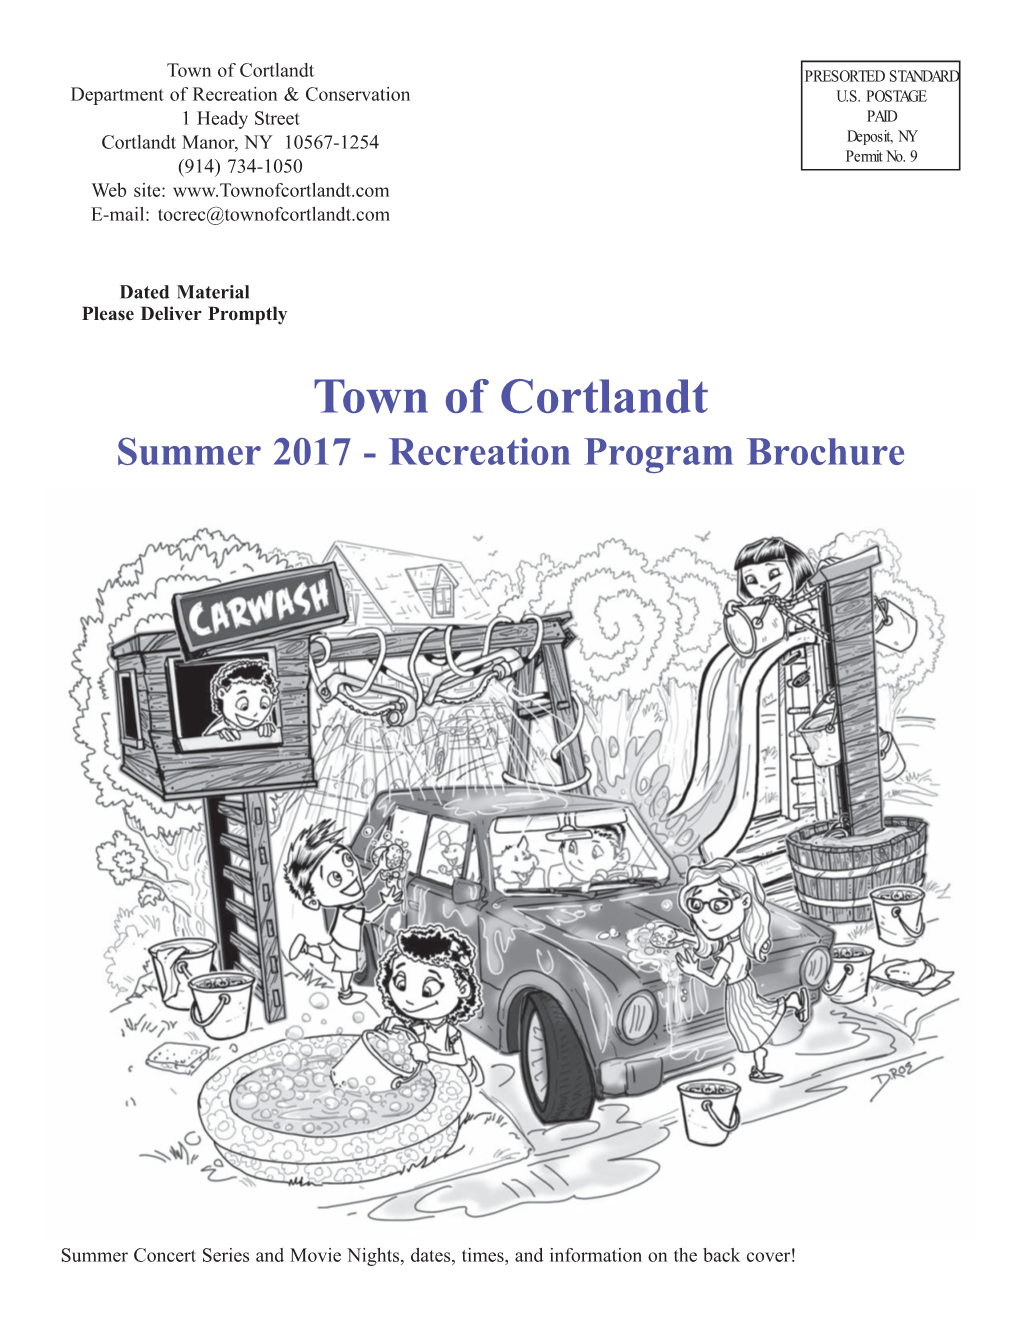 Town of Cortlandt PRESORTED STANDARD Department of Recreation & Conservation U.S